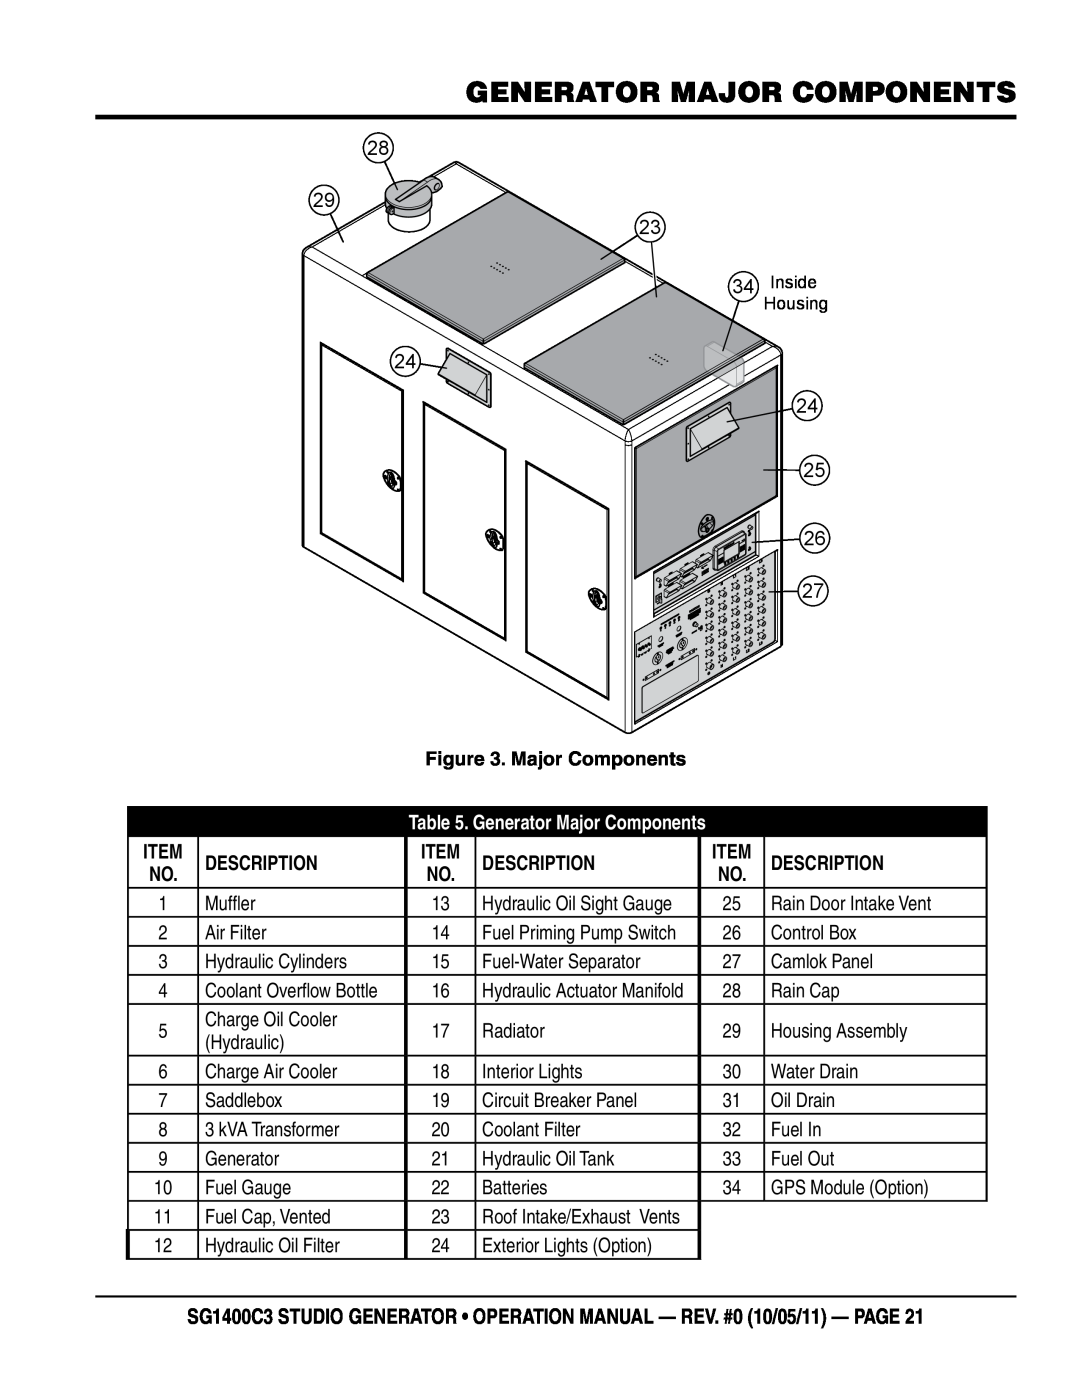 Multiquip SG1400C3 generator MAJOR COMPONENTS, SG1400c3 studio generator operation manual - rev. #0 10/05/11 - page 